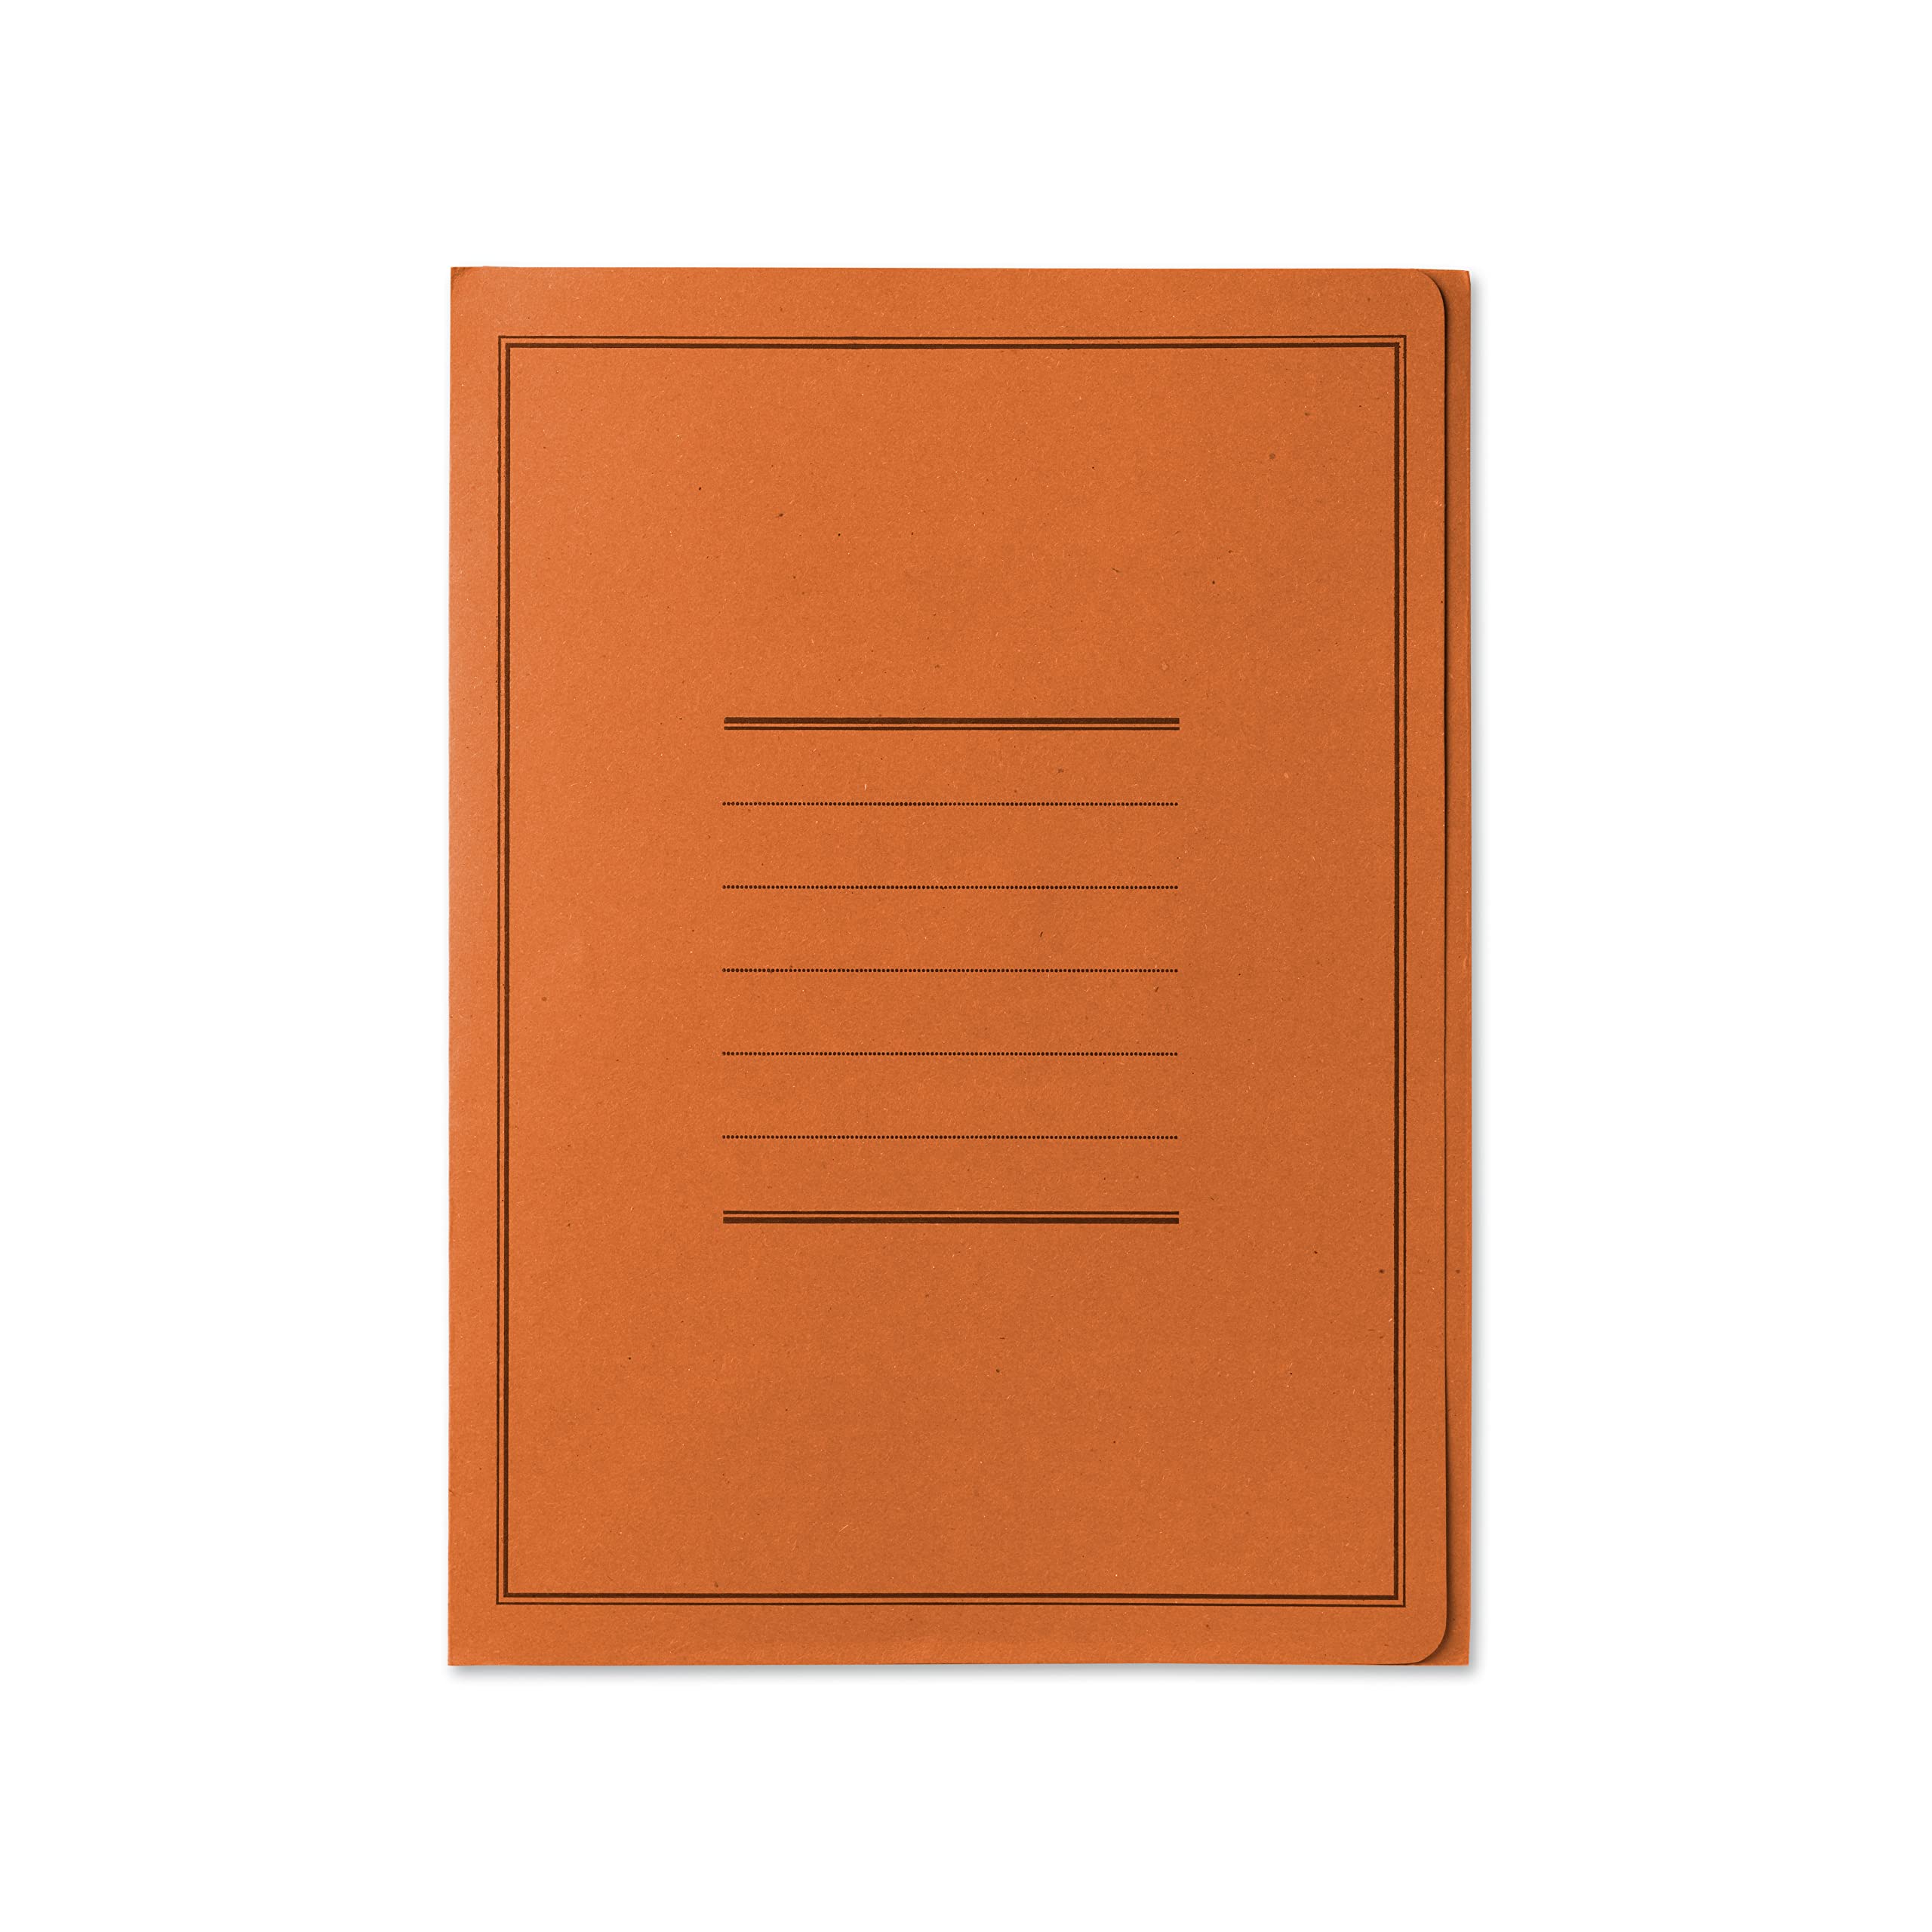 Cartellina manilla 3 lembi con stampa arancio pz.50